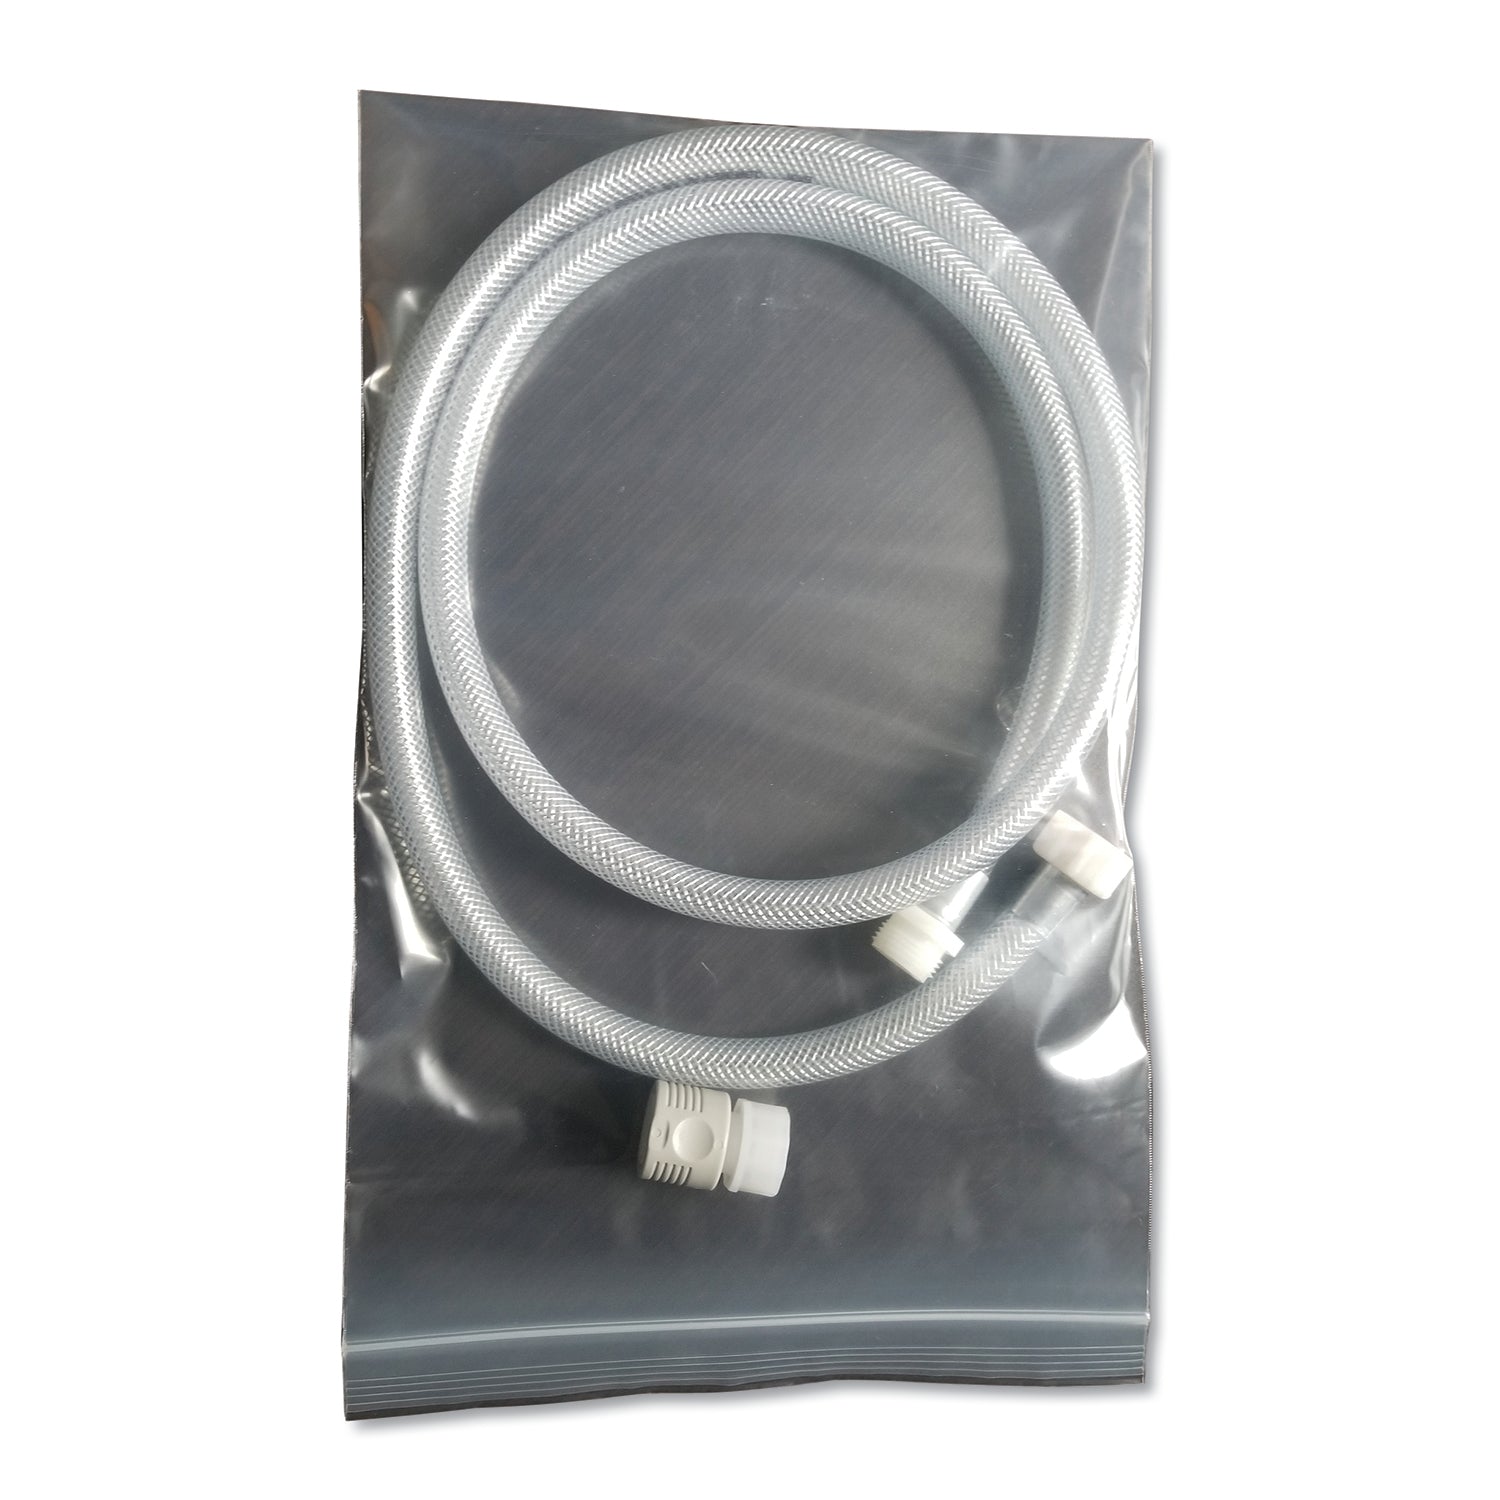 pdc-hose-kit-05-hose-diameter-05-x-6-ft-clear-green-10-carton_bwk710050 - 1